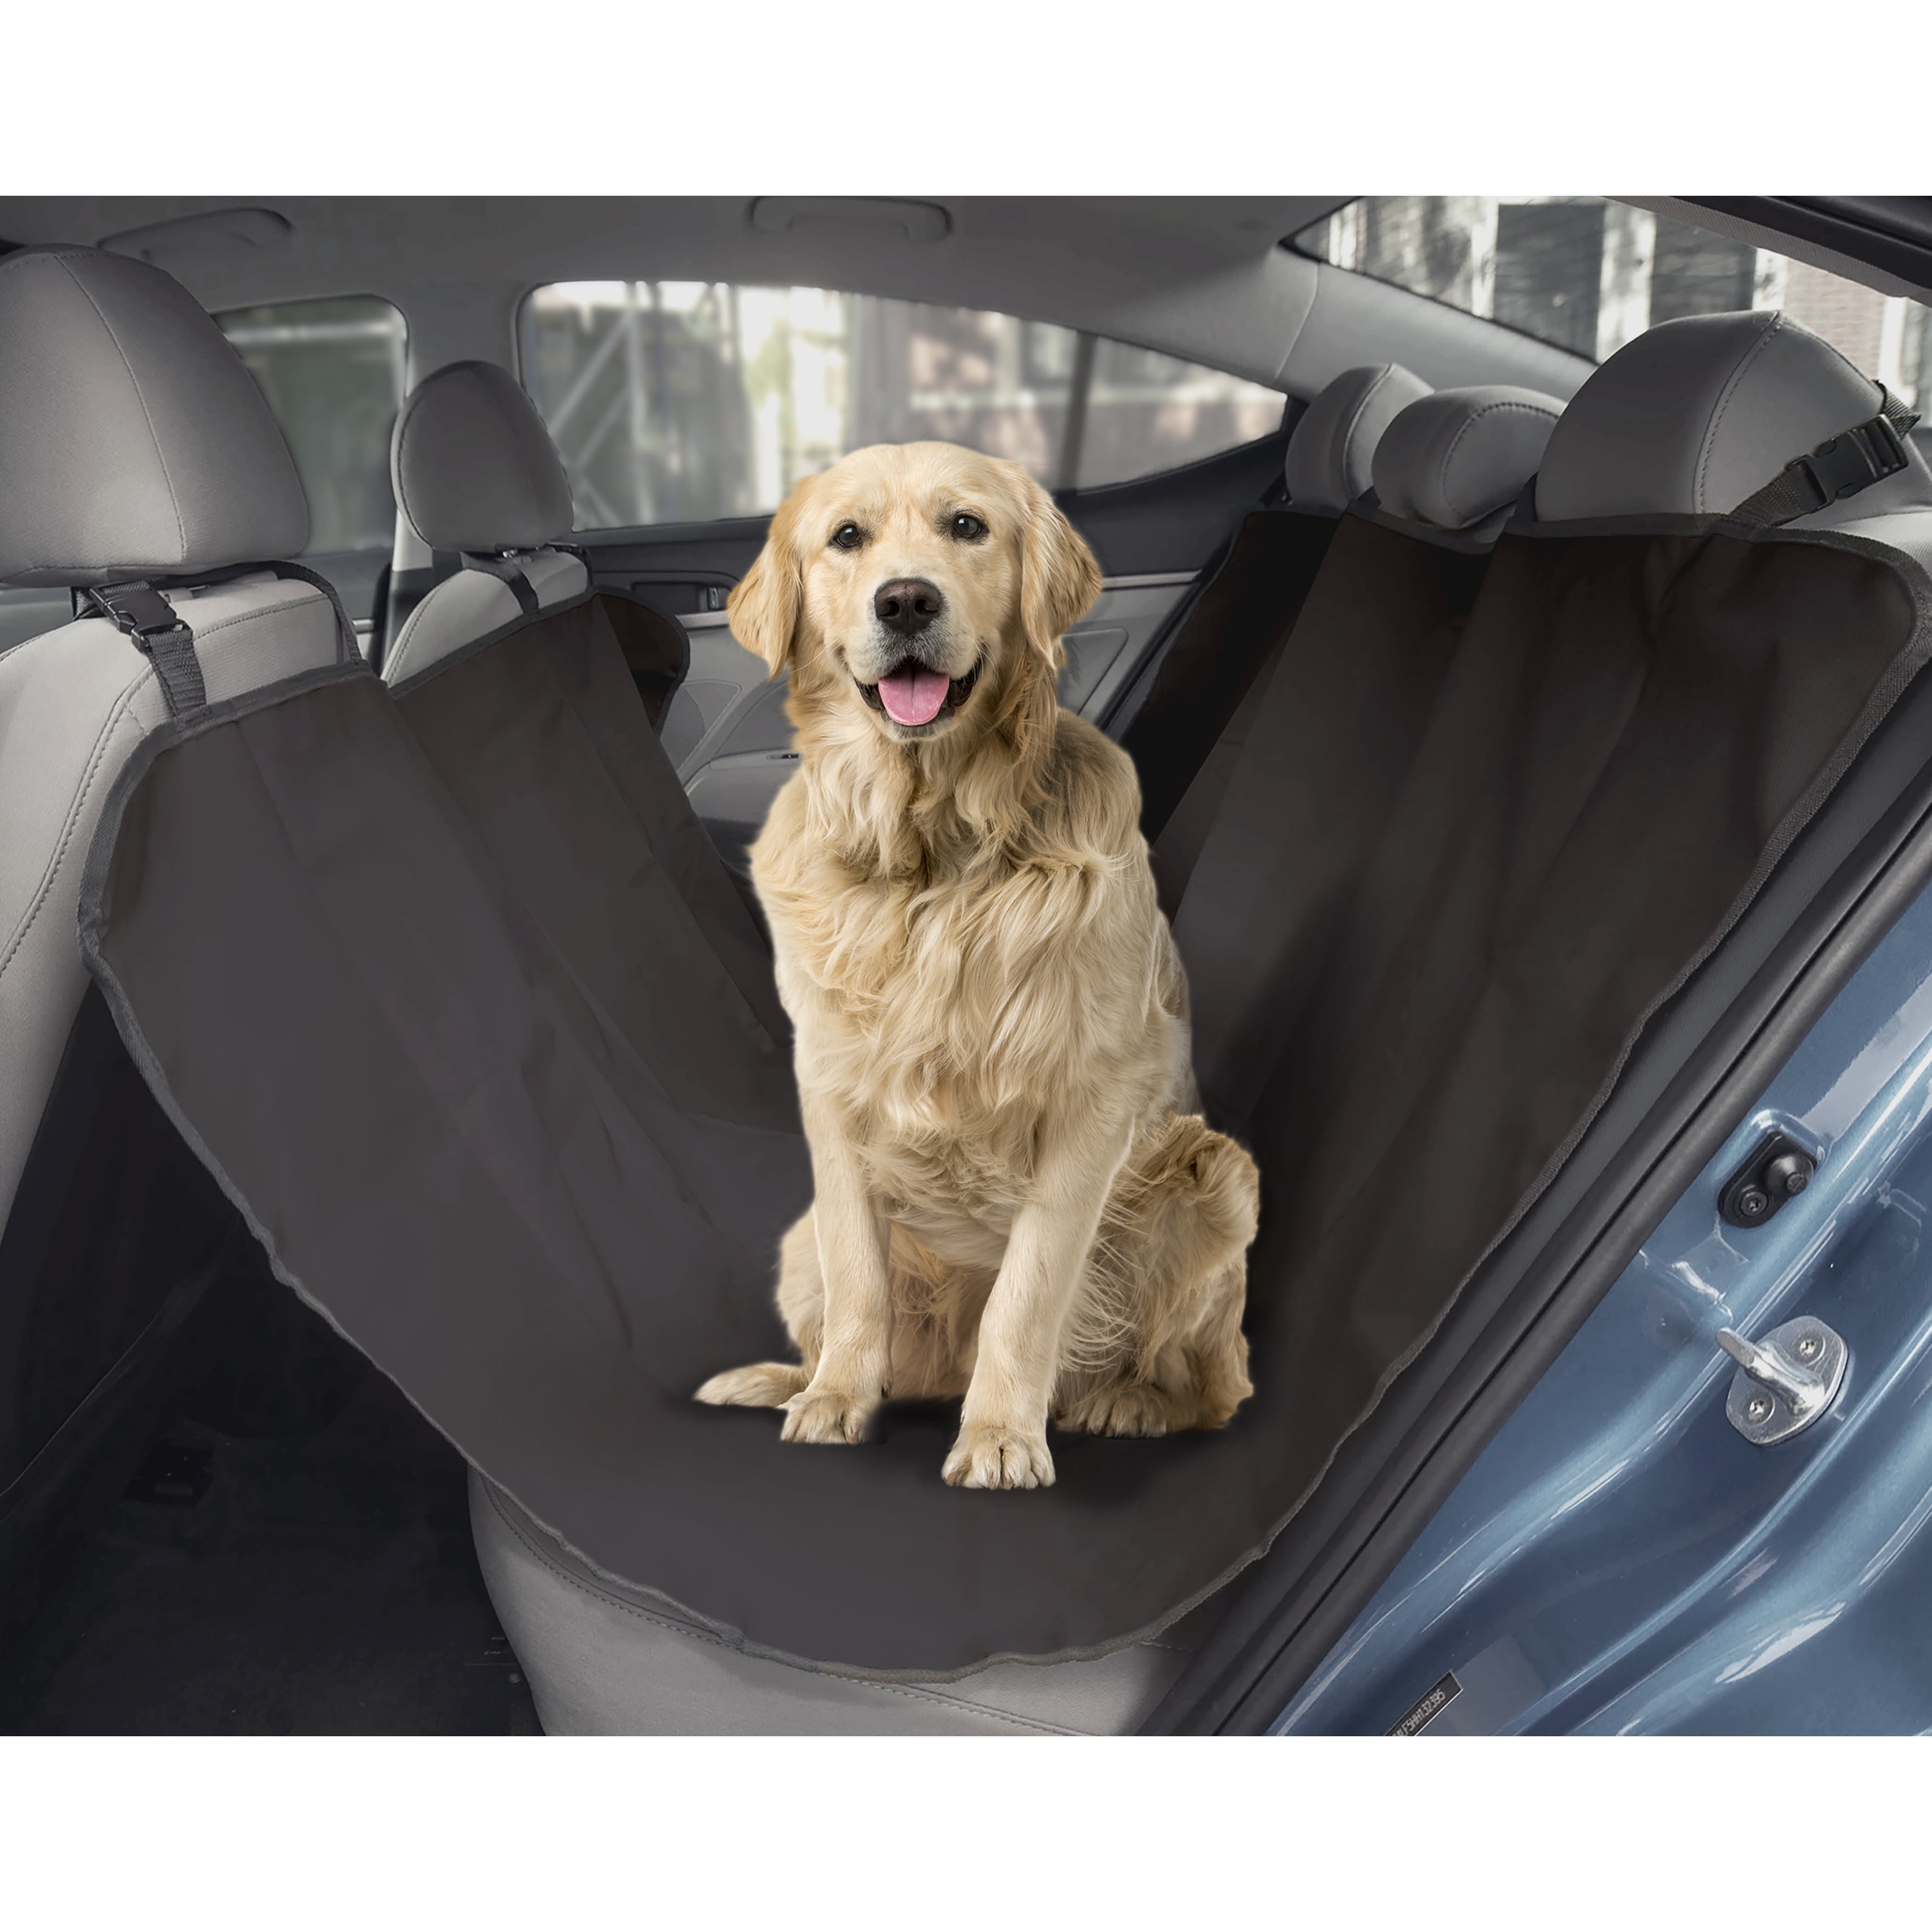 Precious Tails CoPilot Waterproof Dog Car Seat Cover, Black, Large, 53